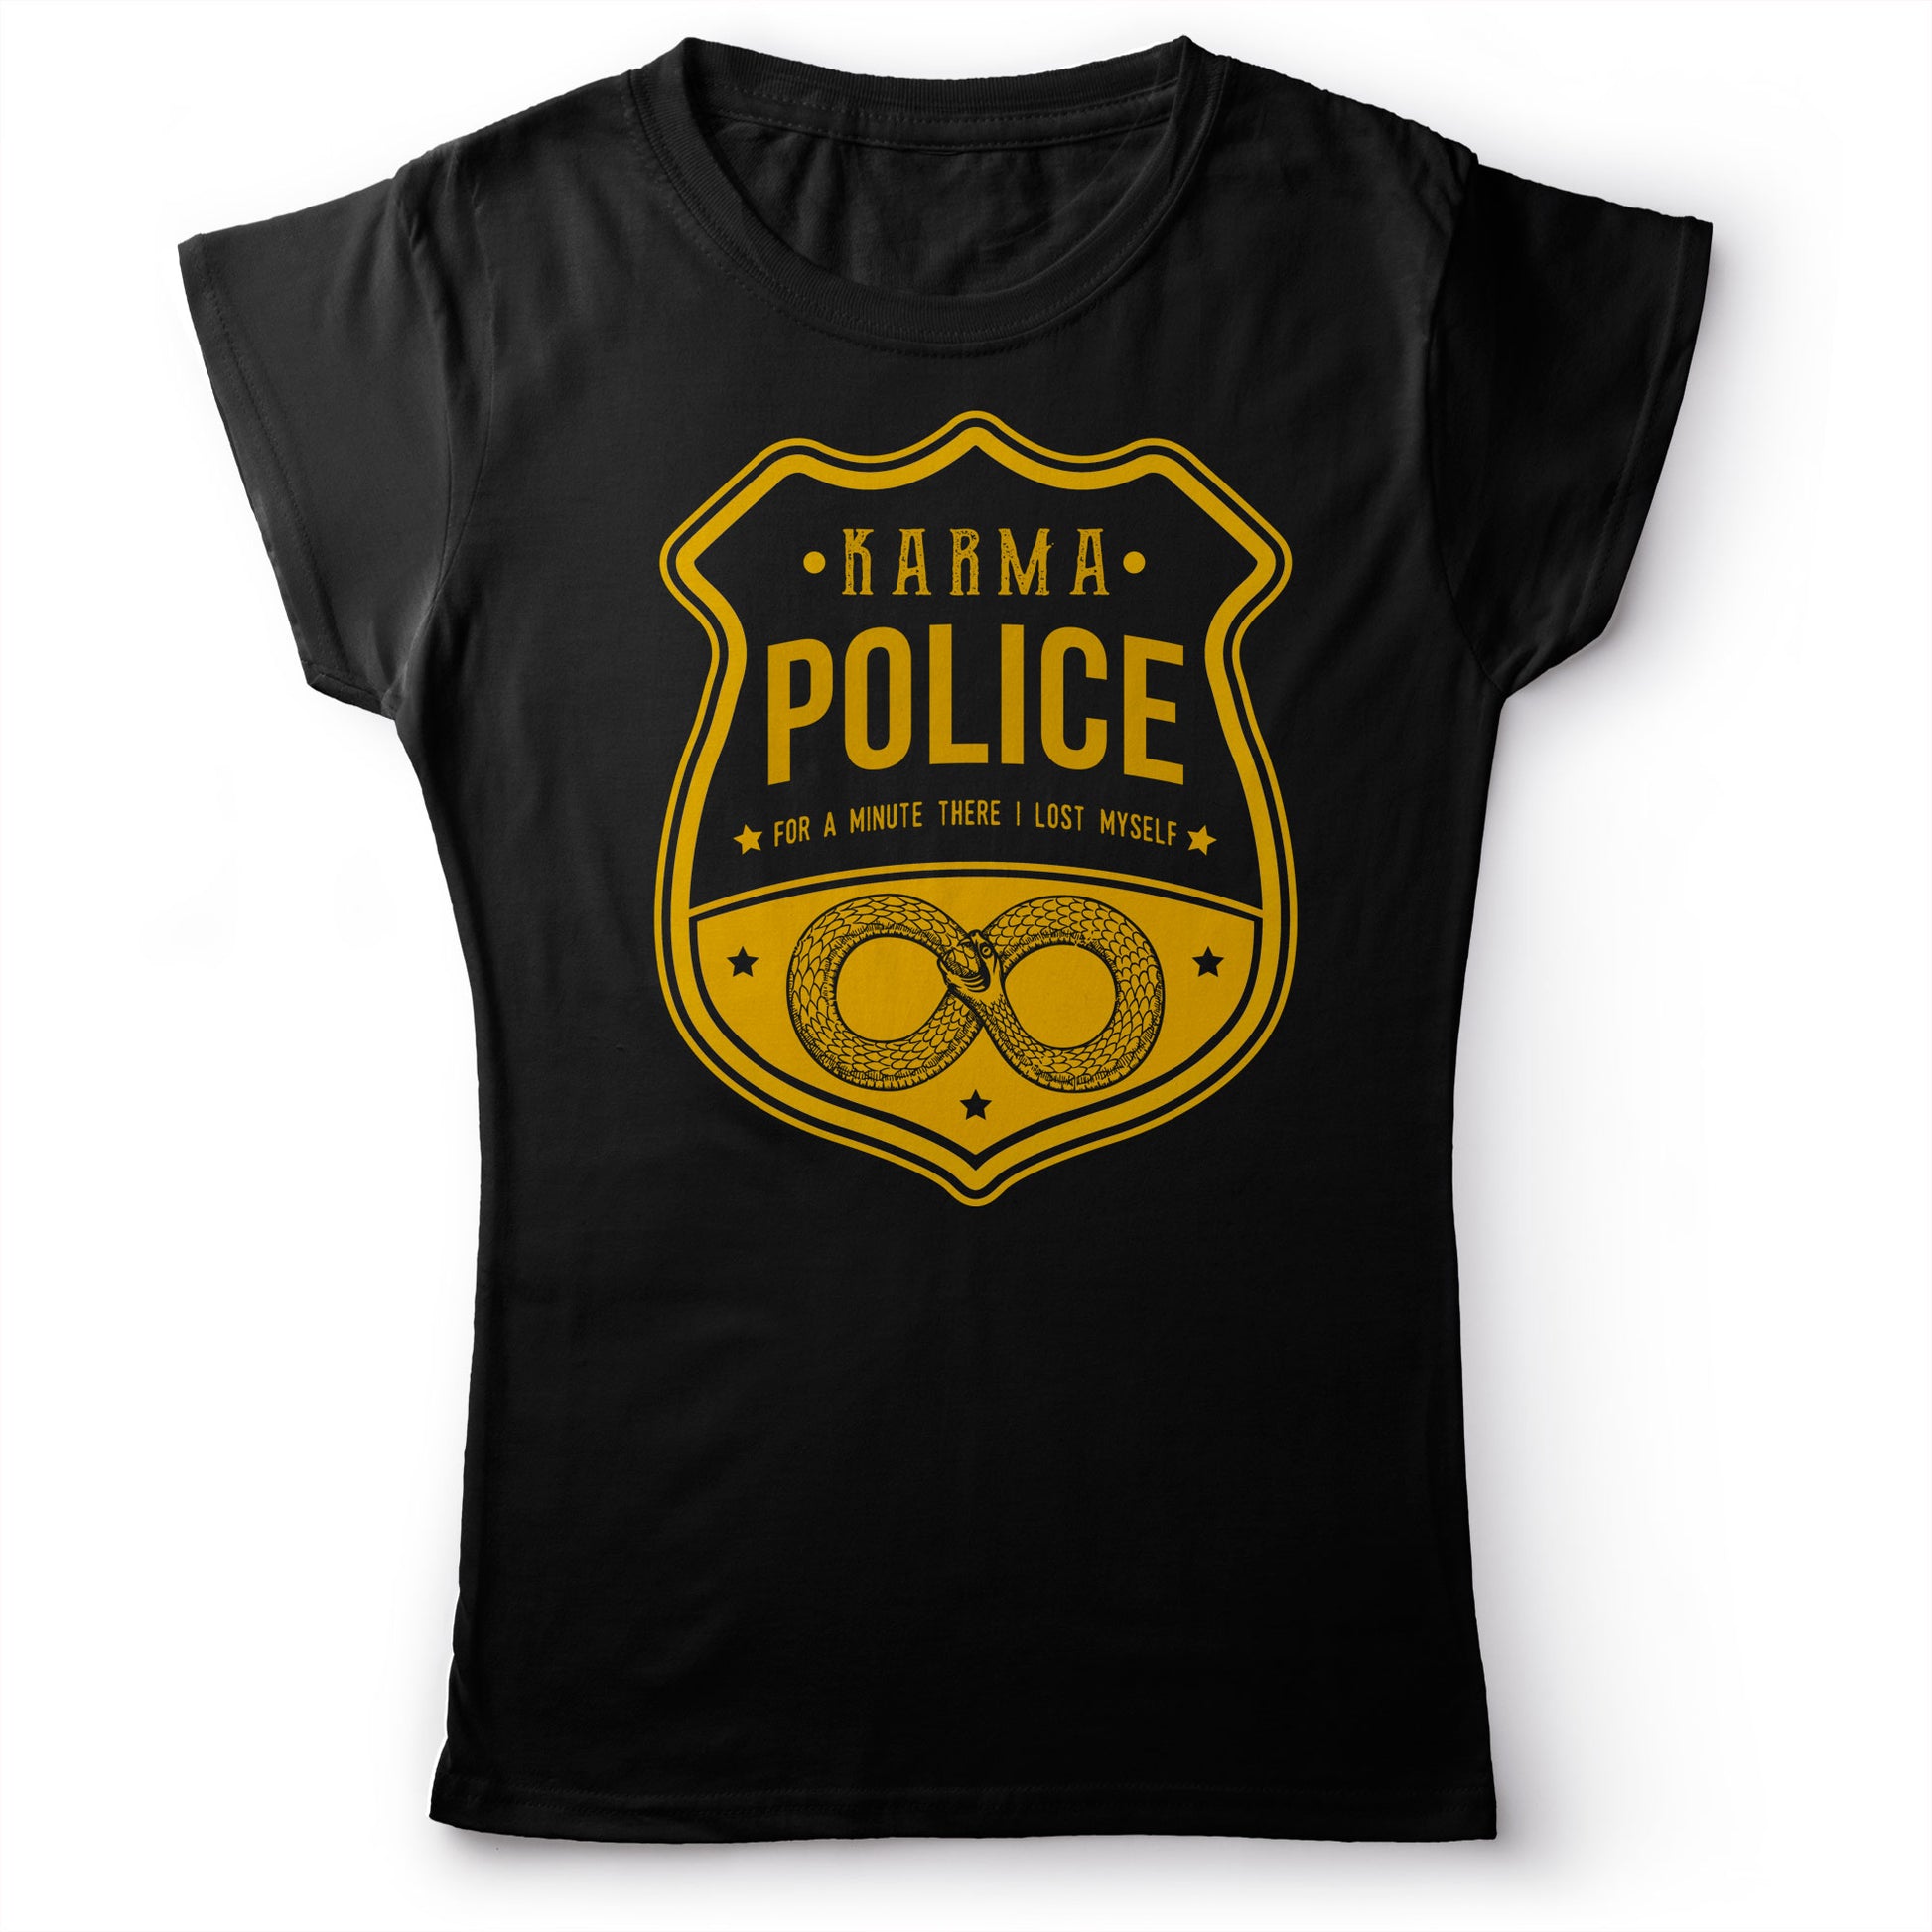 Radiohead - Karma Police - Women's T-shirt Black 2